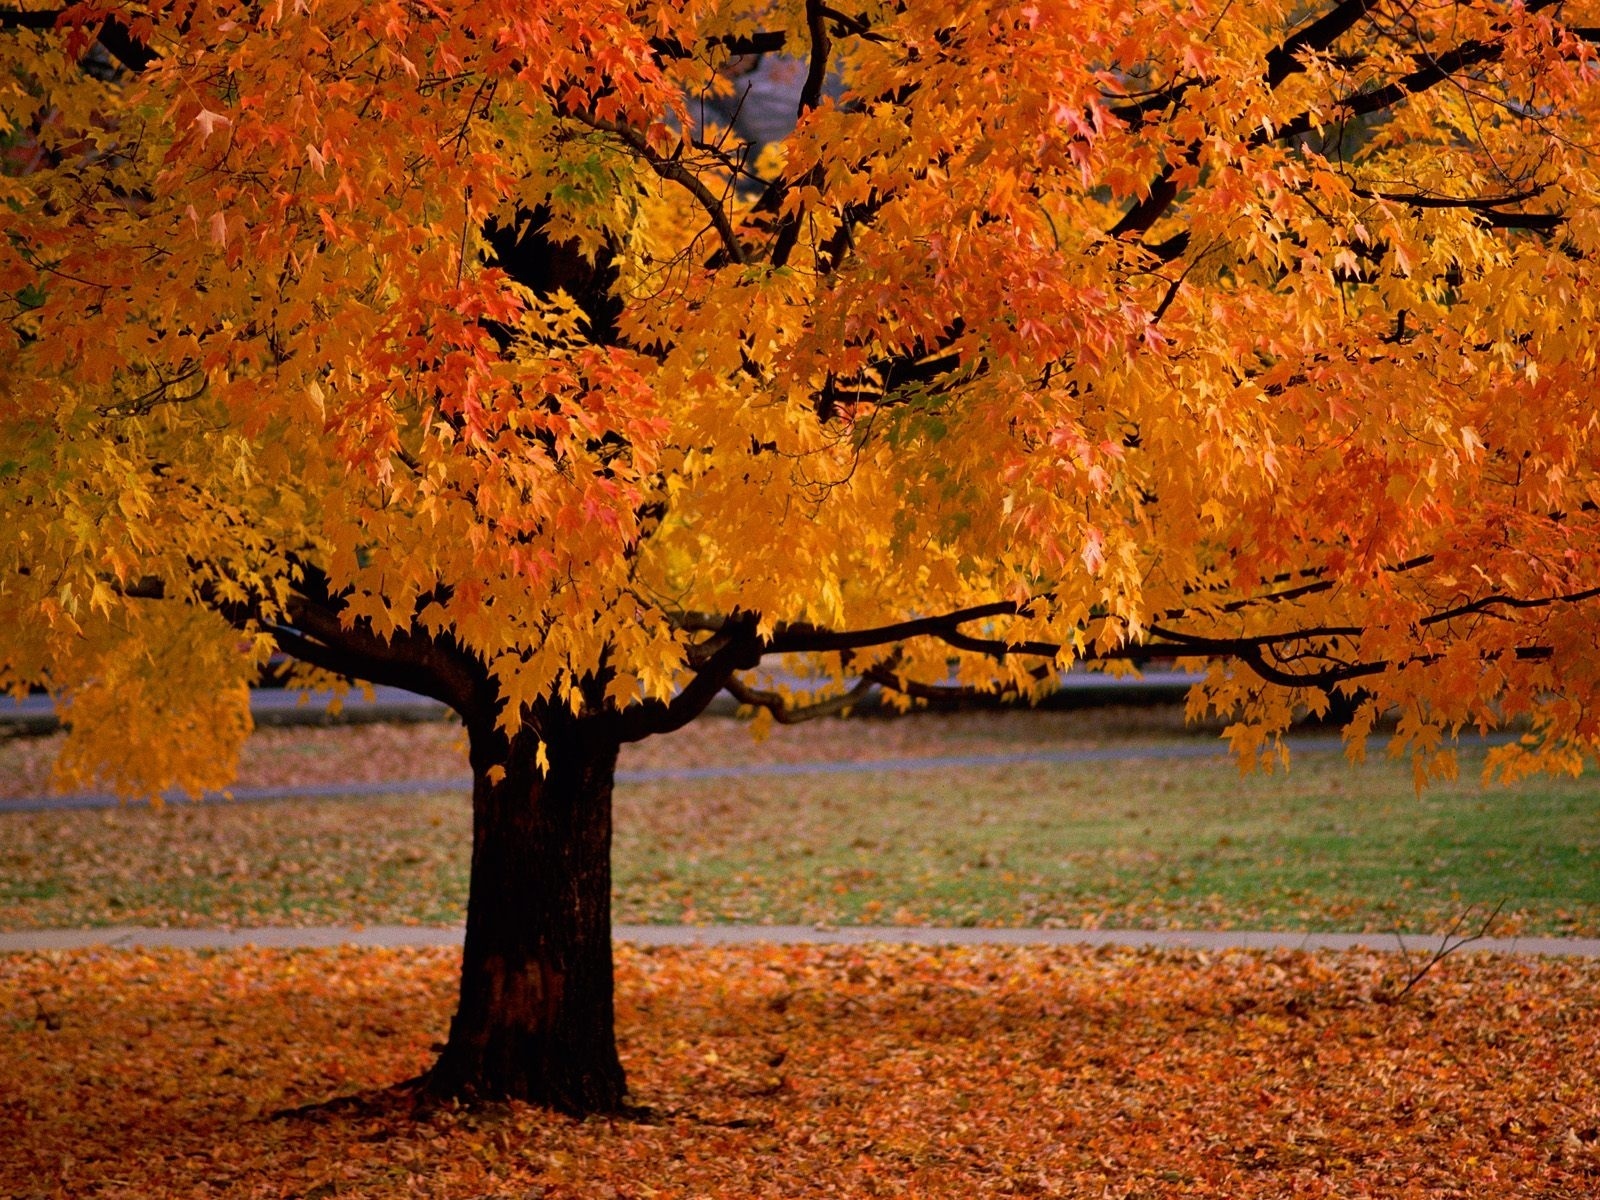 Trees In Autumn Scenery Pics Wallpaper